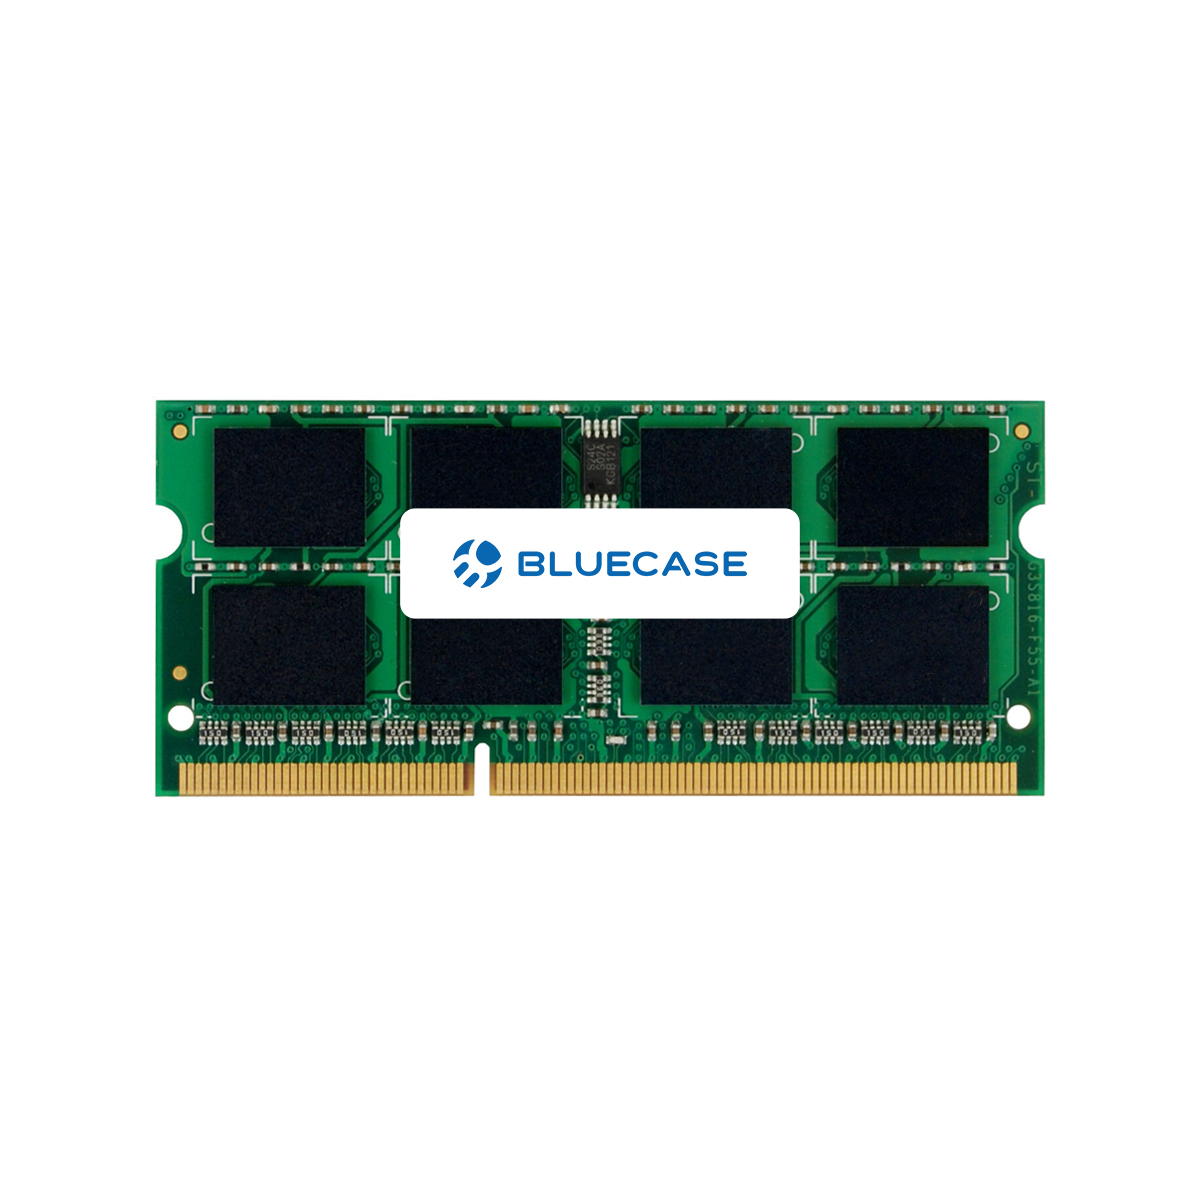 MEMÓRIA RAM DDR3 1333MHz SODIMM LOW VOLTAGE 1,35V BMDSO3D13M135VS9/4G - 1